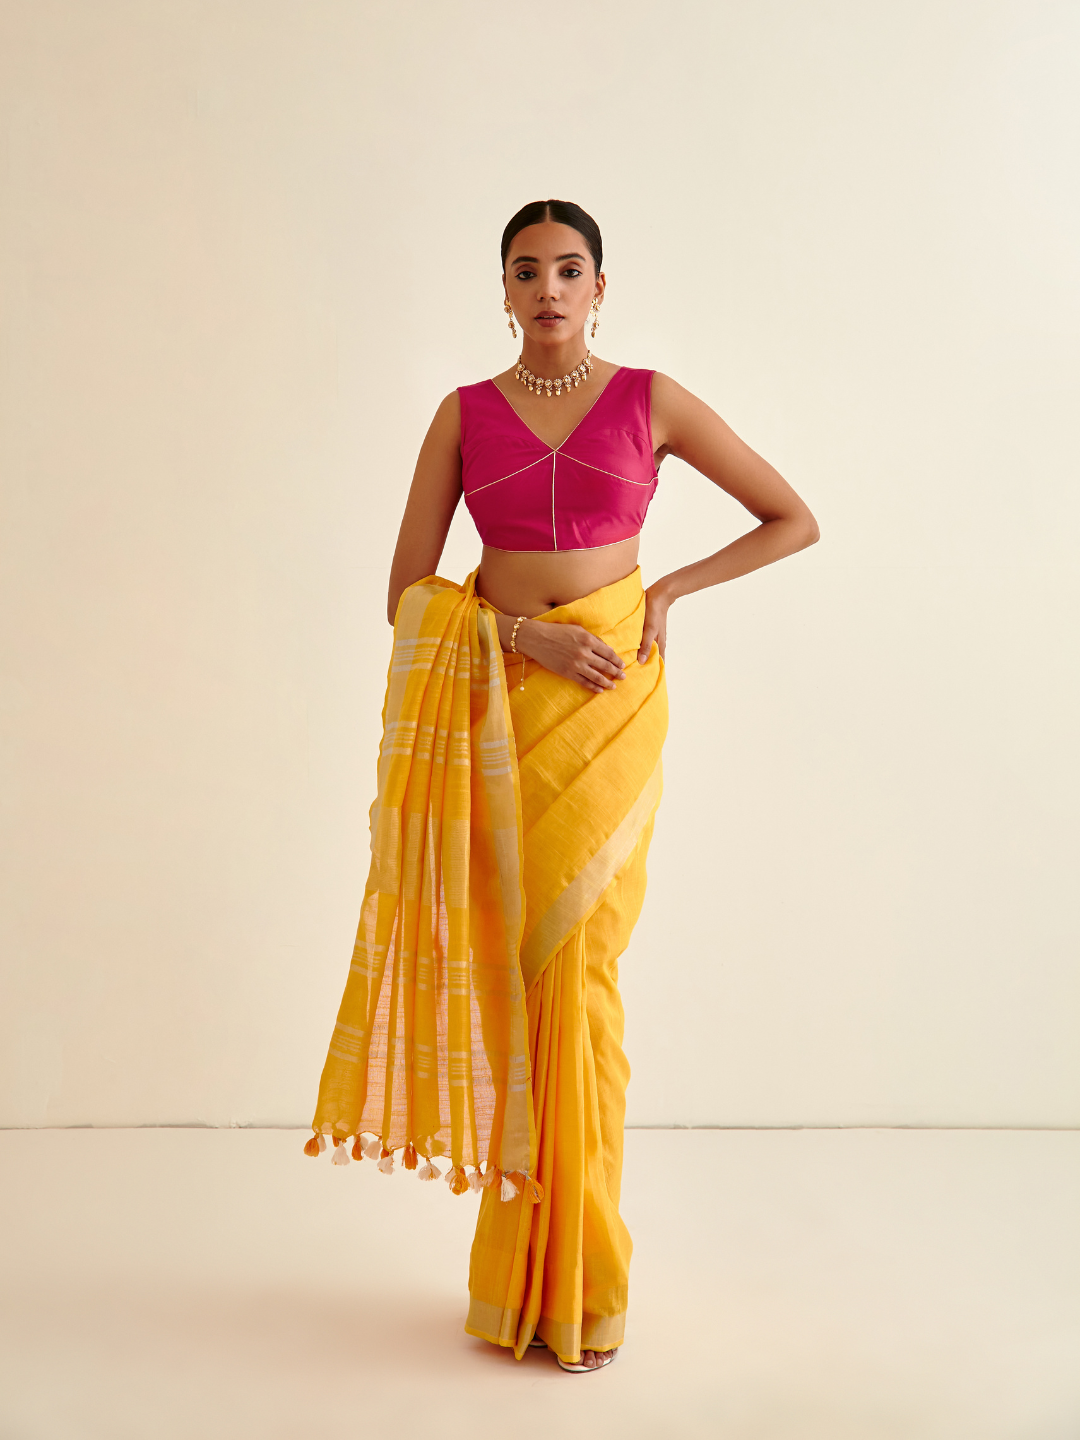 Banarasi woven sari with Silver Highlights-Sunflower yellow